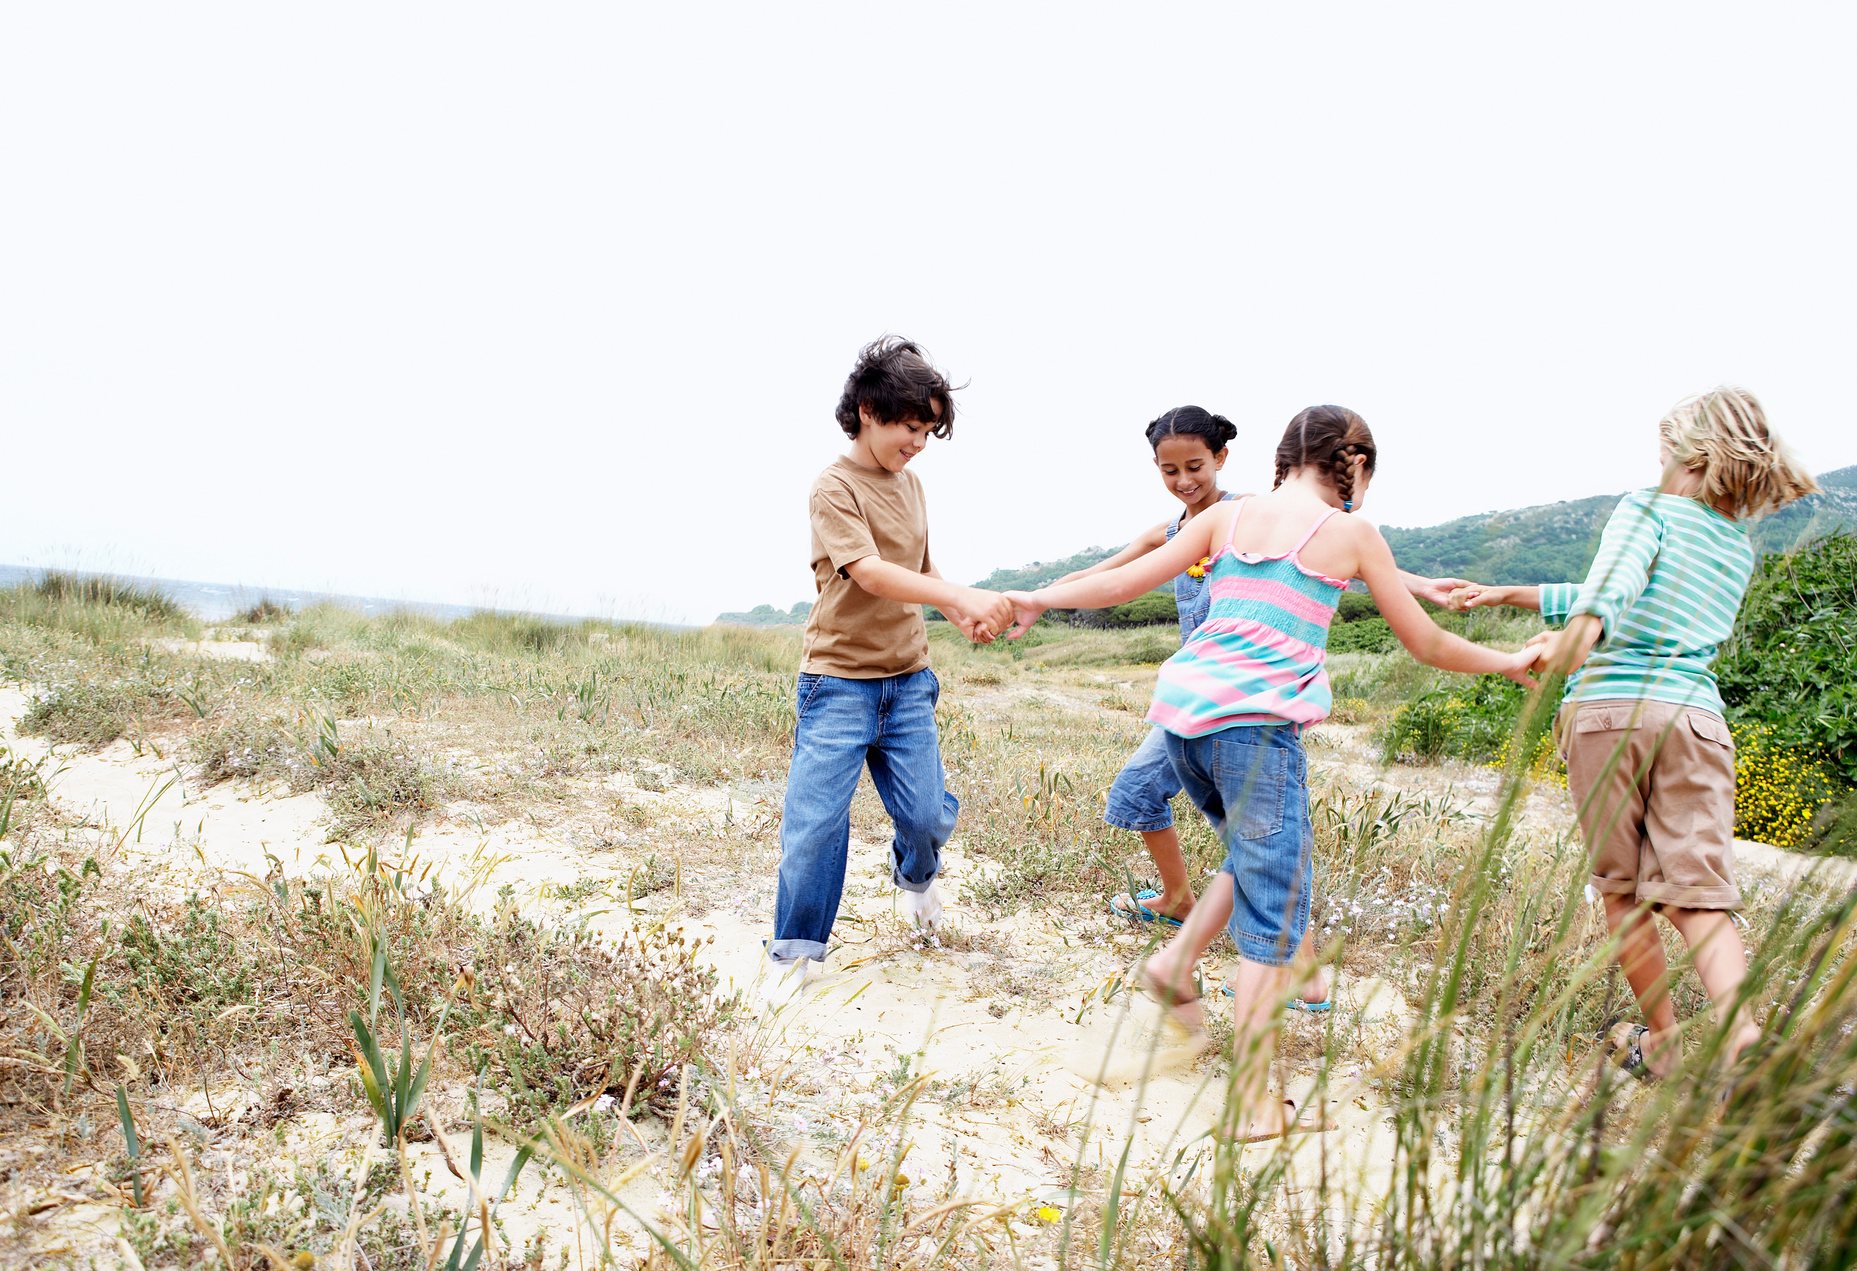 Children playing ring around the rosy on grassy beach